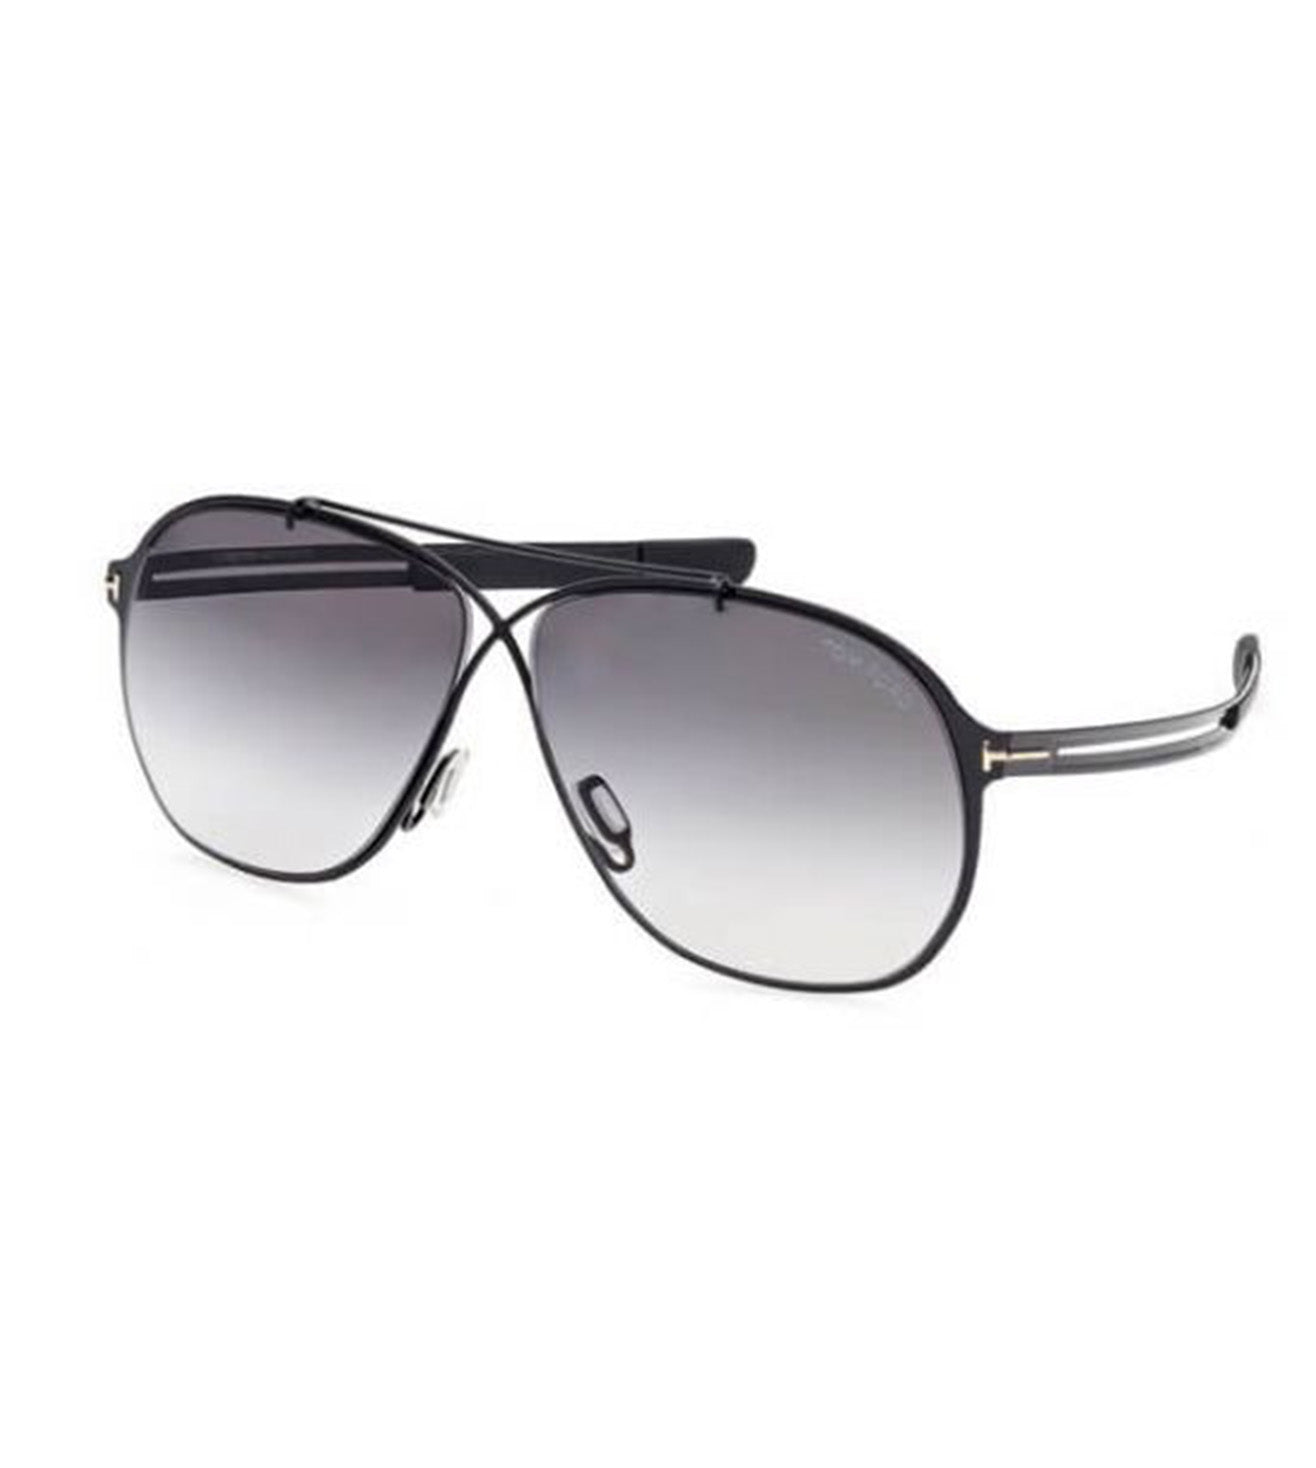 Tom Ford Men's Grey Aviator Sunglasses